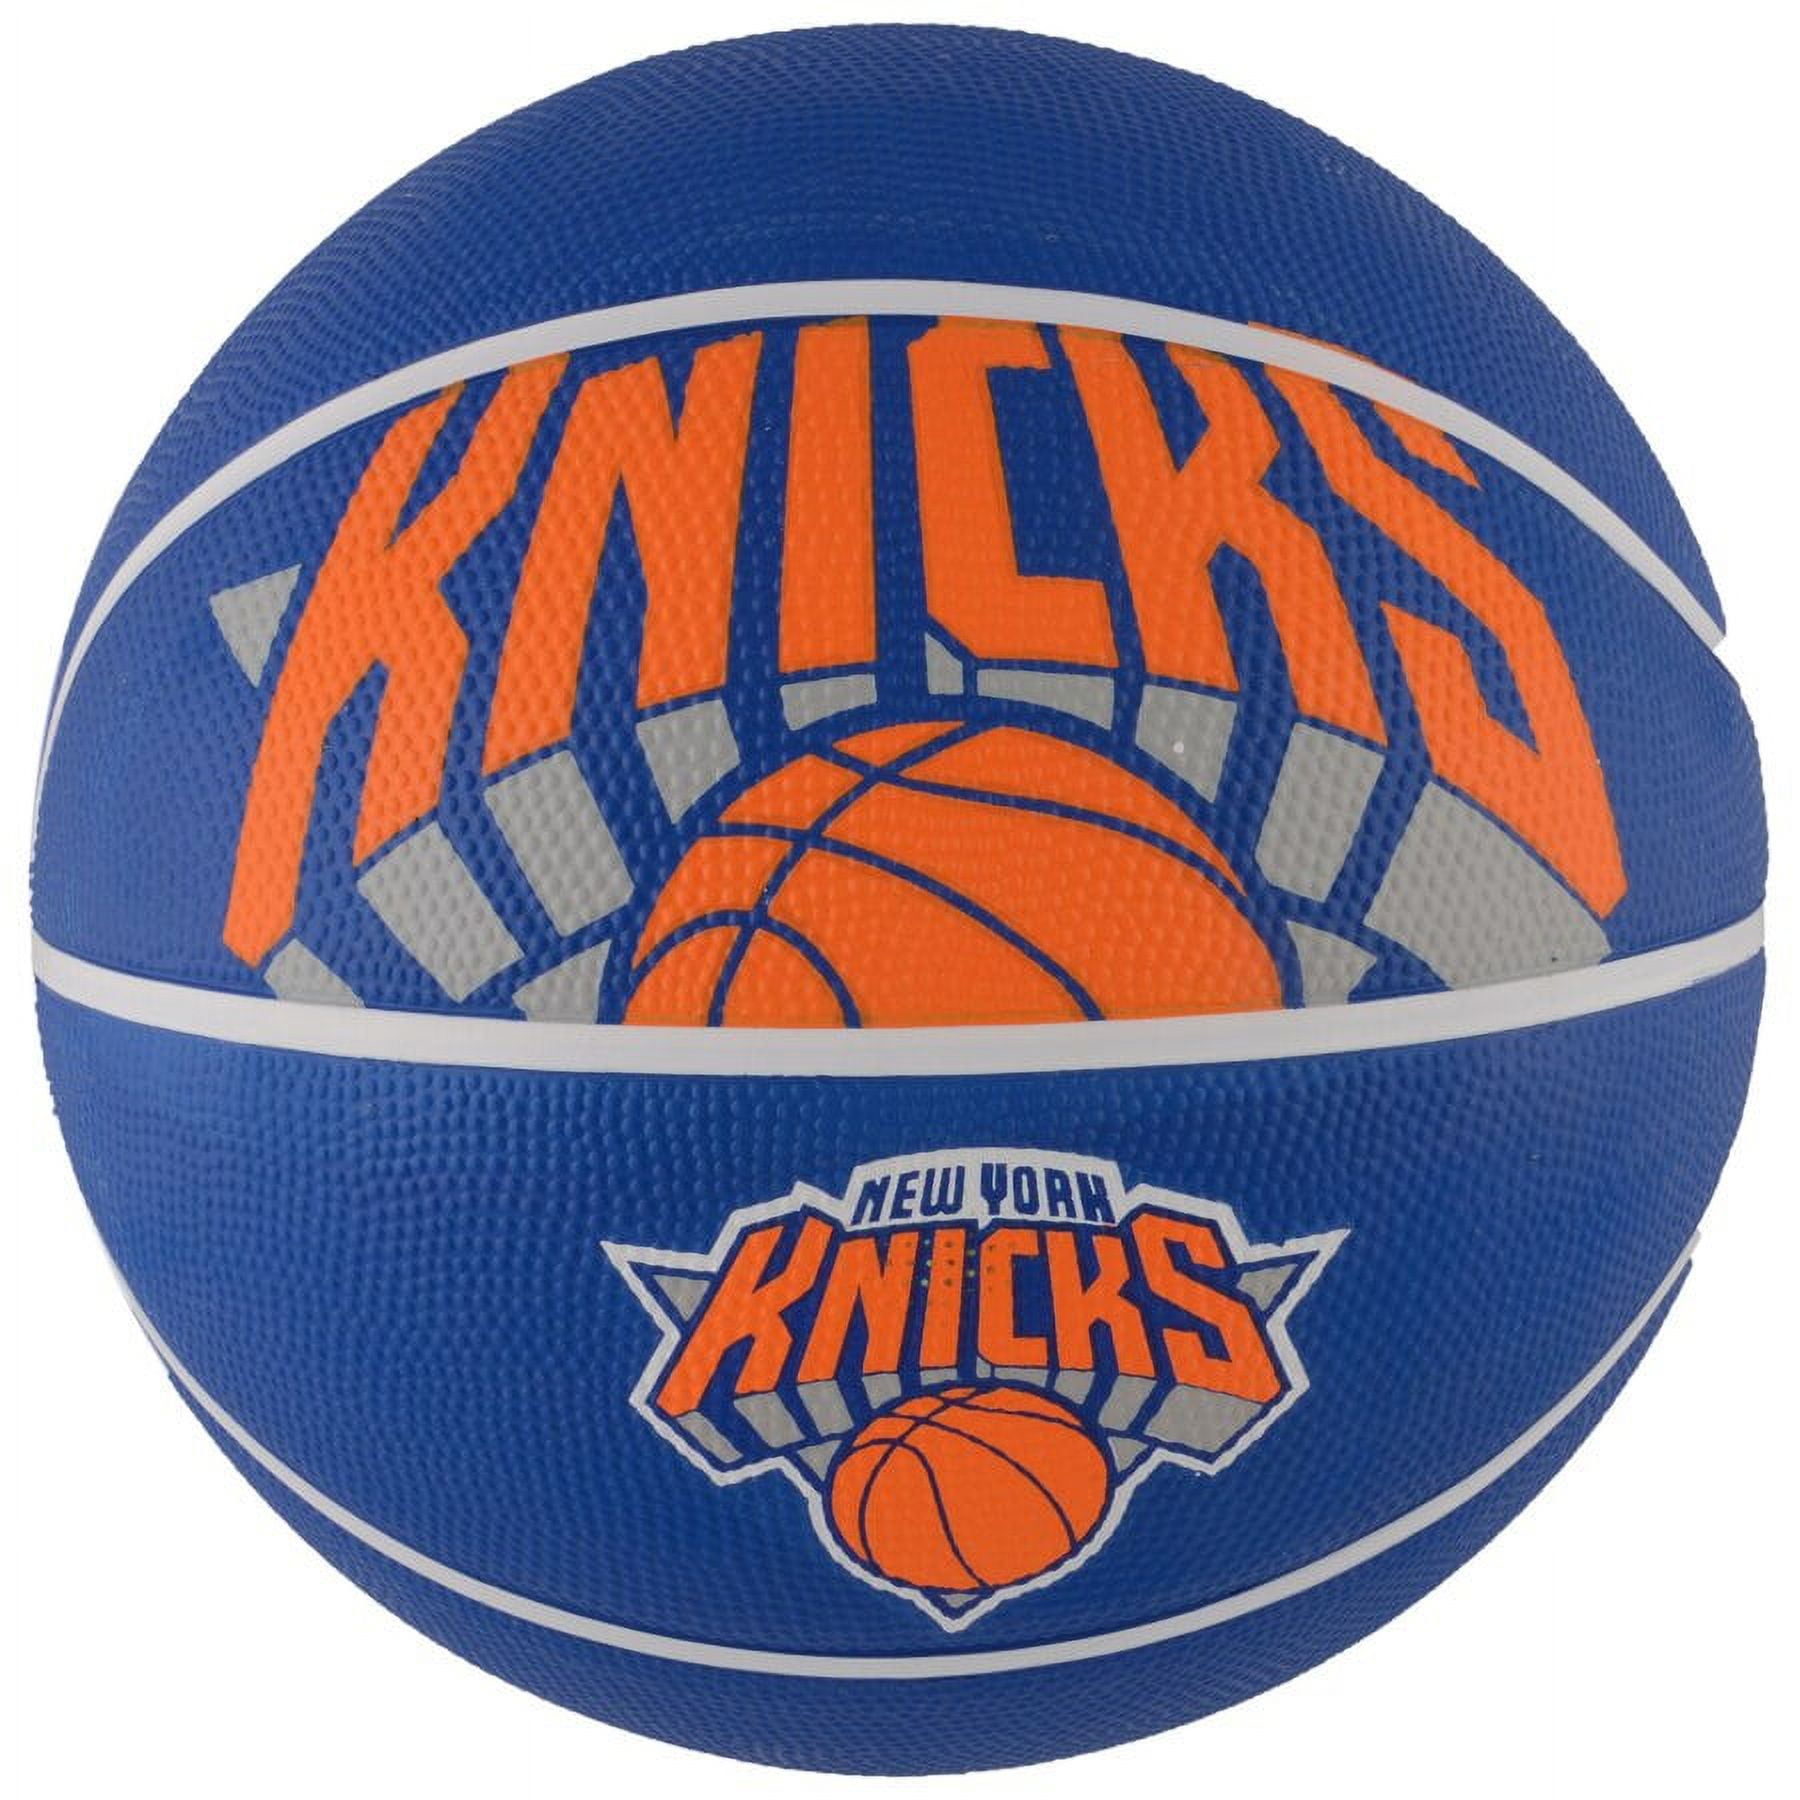 Mini-ballon NBA Spaldeens NY Nicks